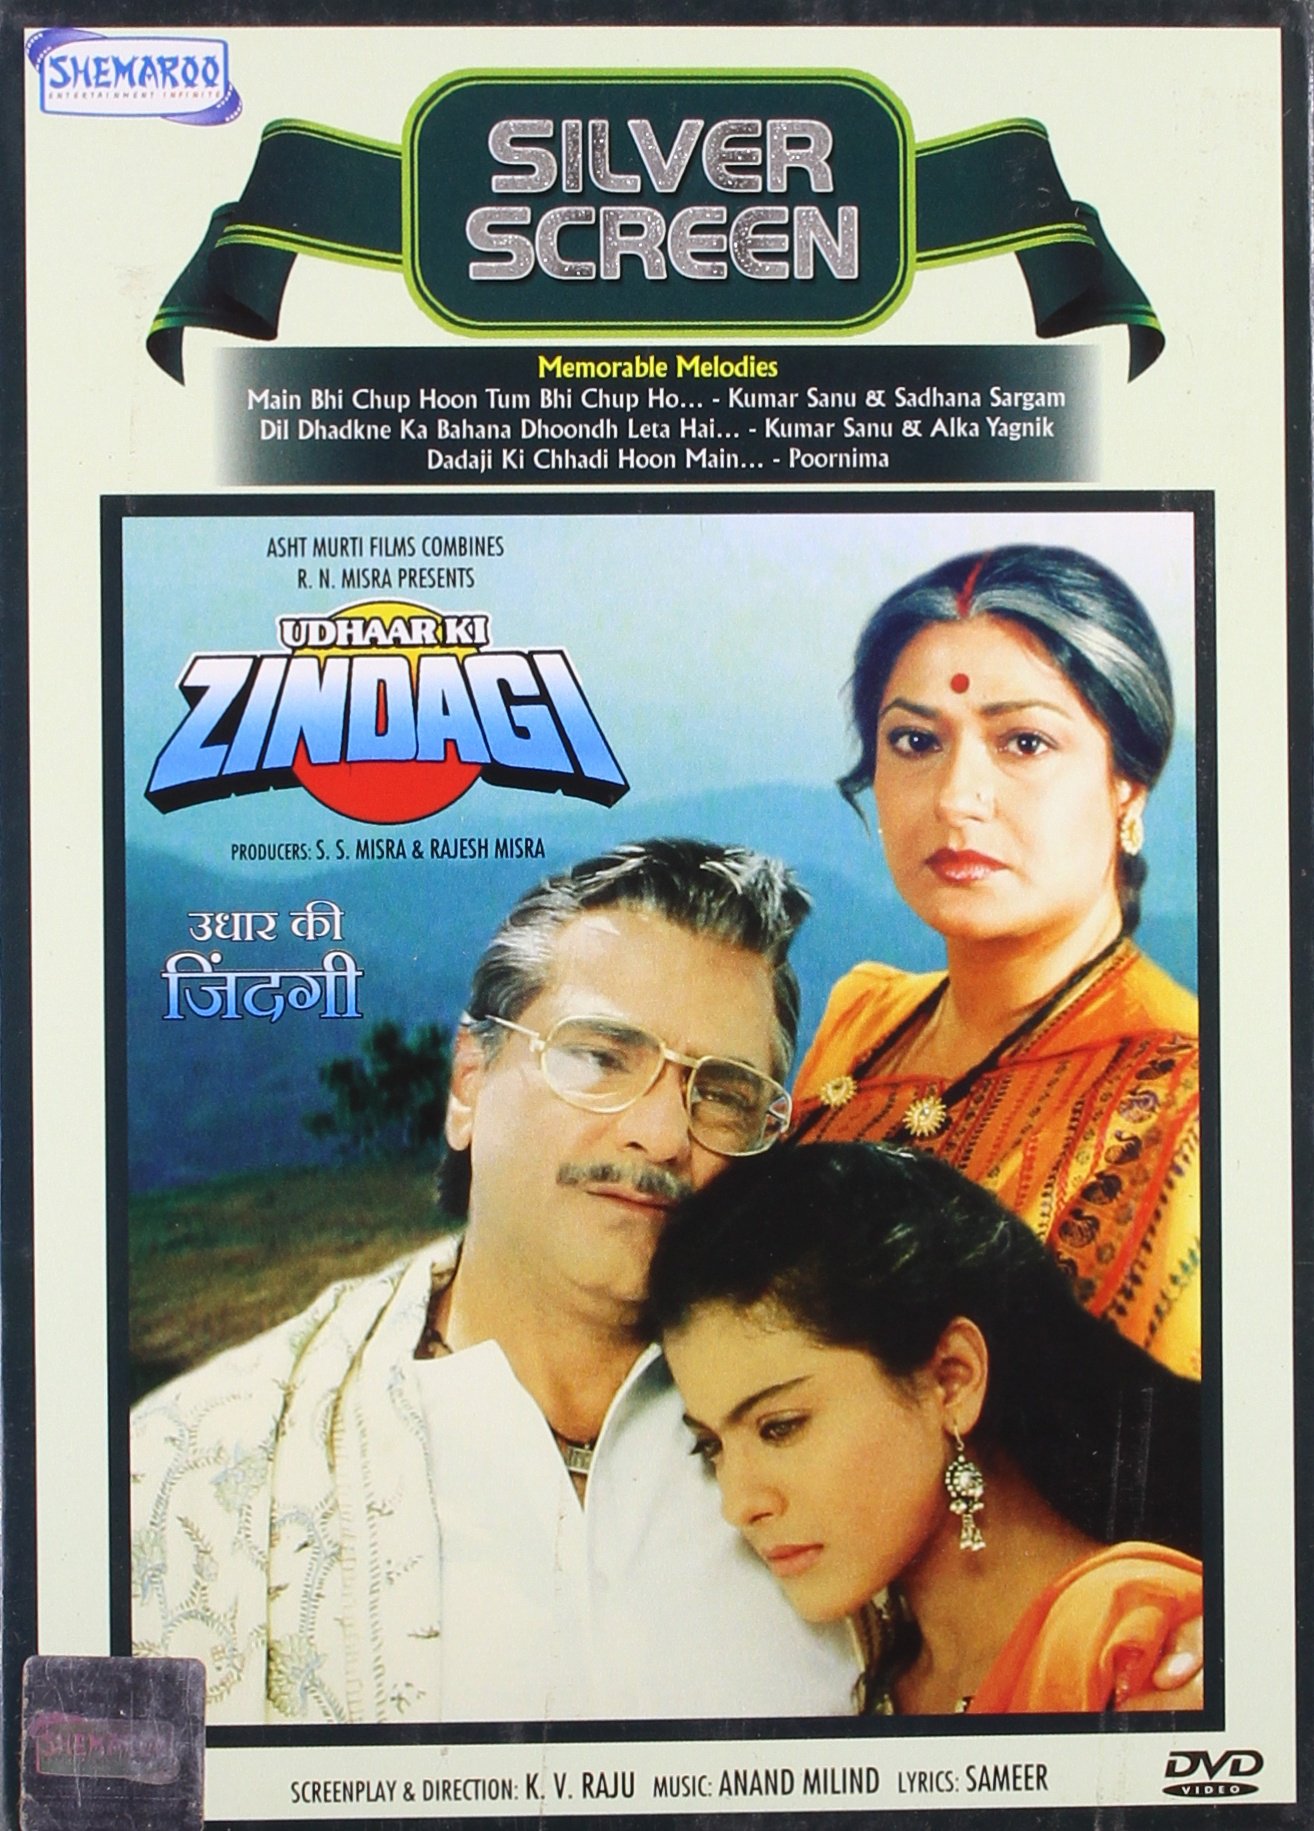 udhar-ki-zindagi-movie-purchase-or-watch-online